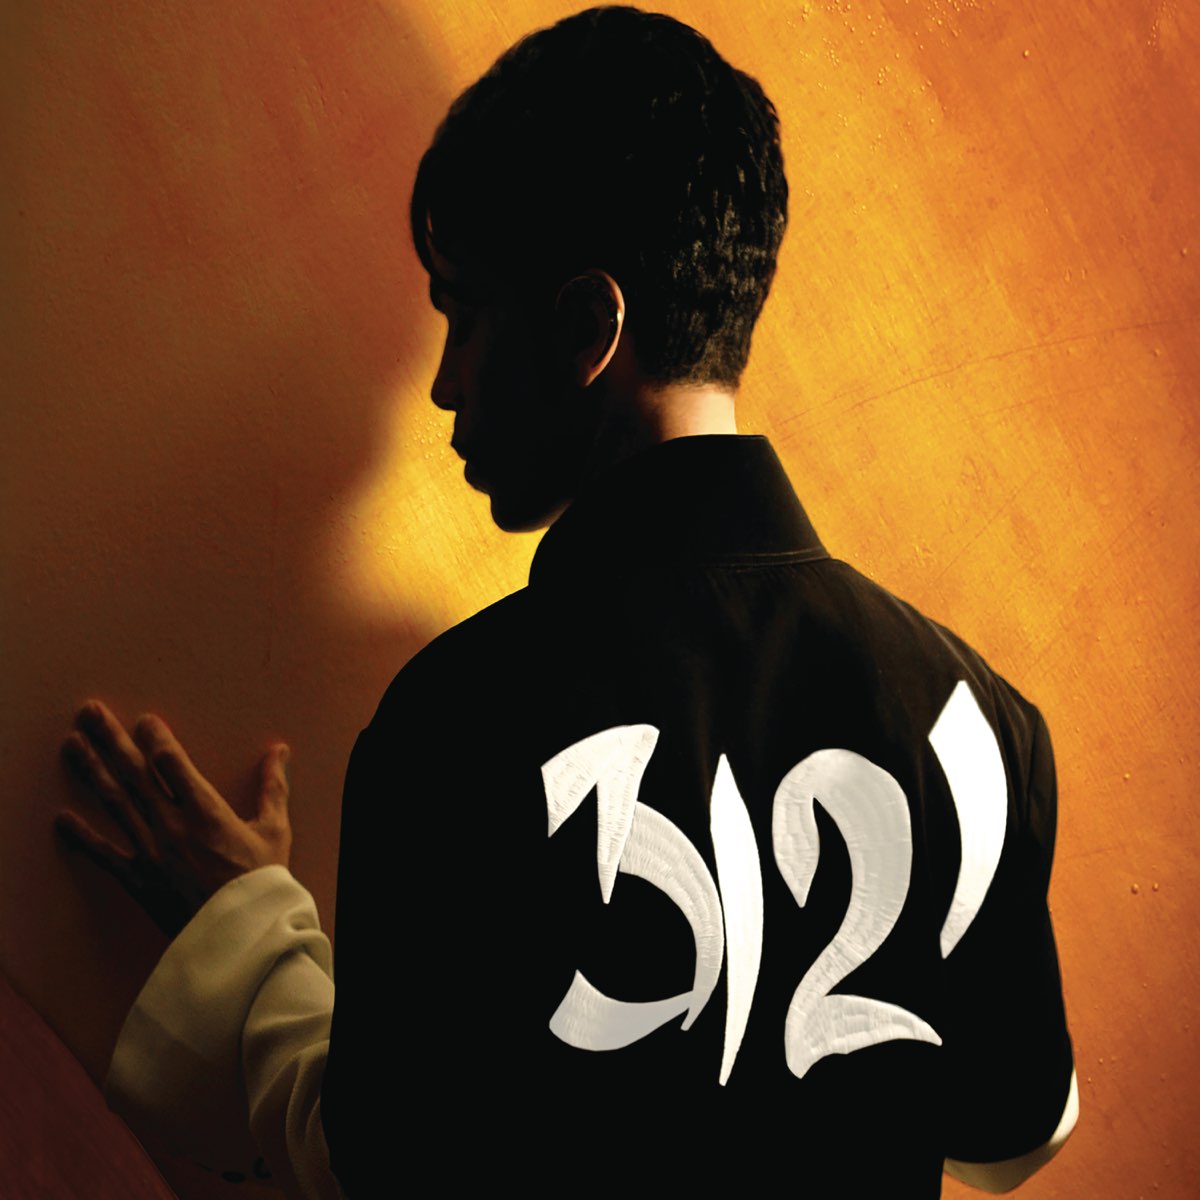 Prince 3121 cover artwork